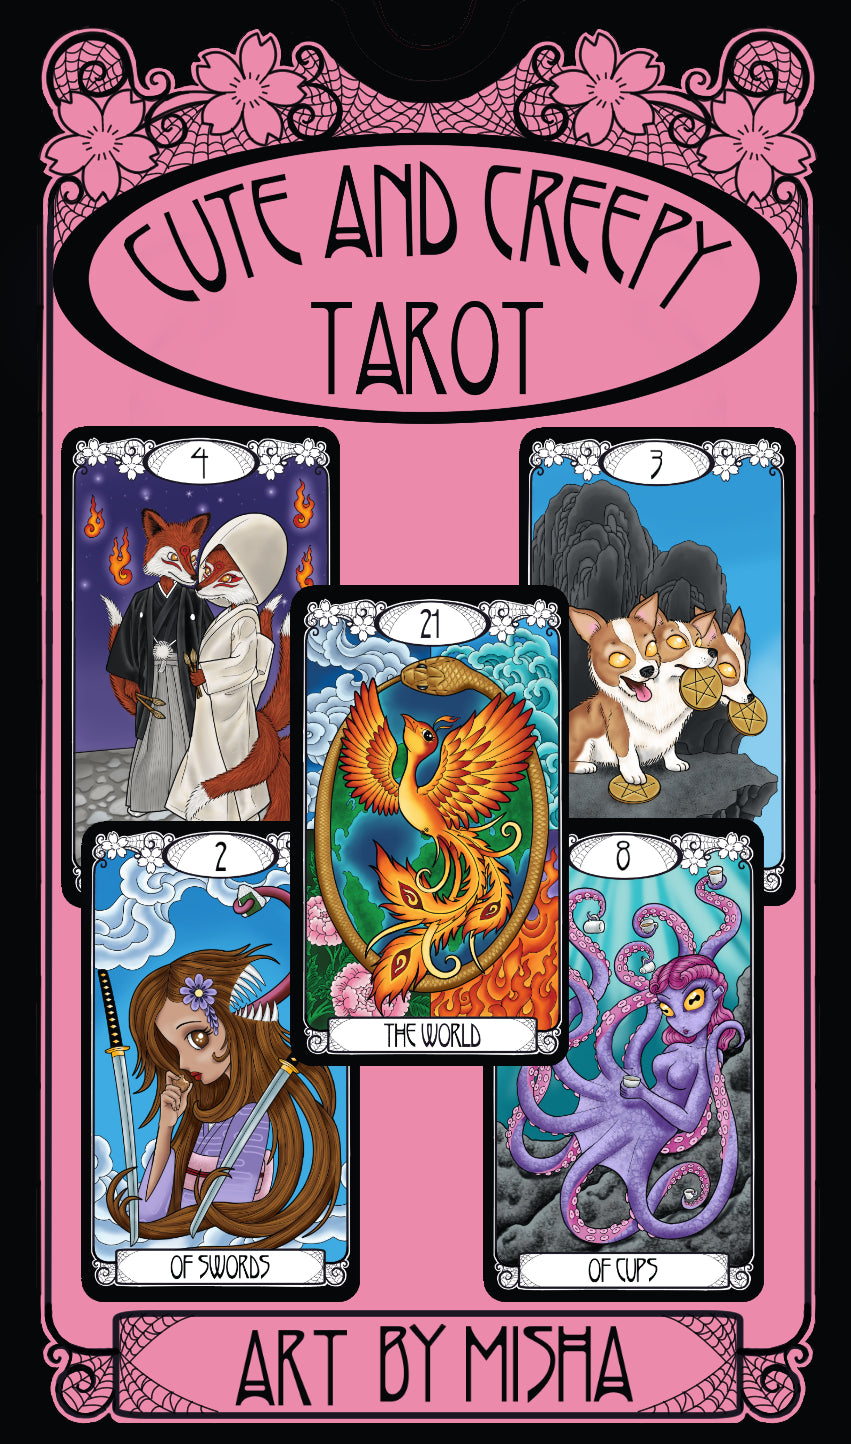 SIGNED Cute & Creepy Tarot Deck, Companion Guide & Coloring Book